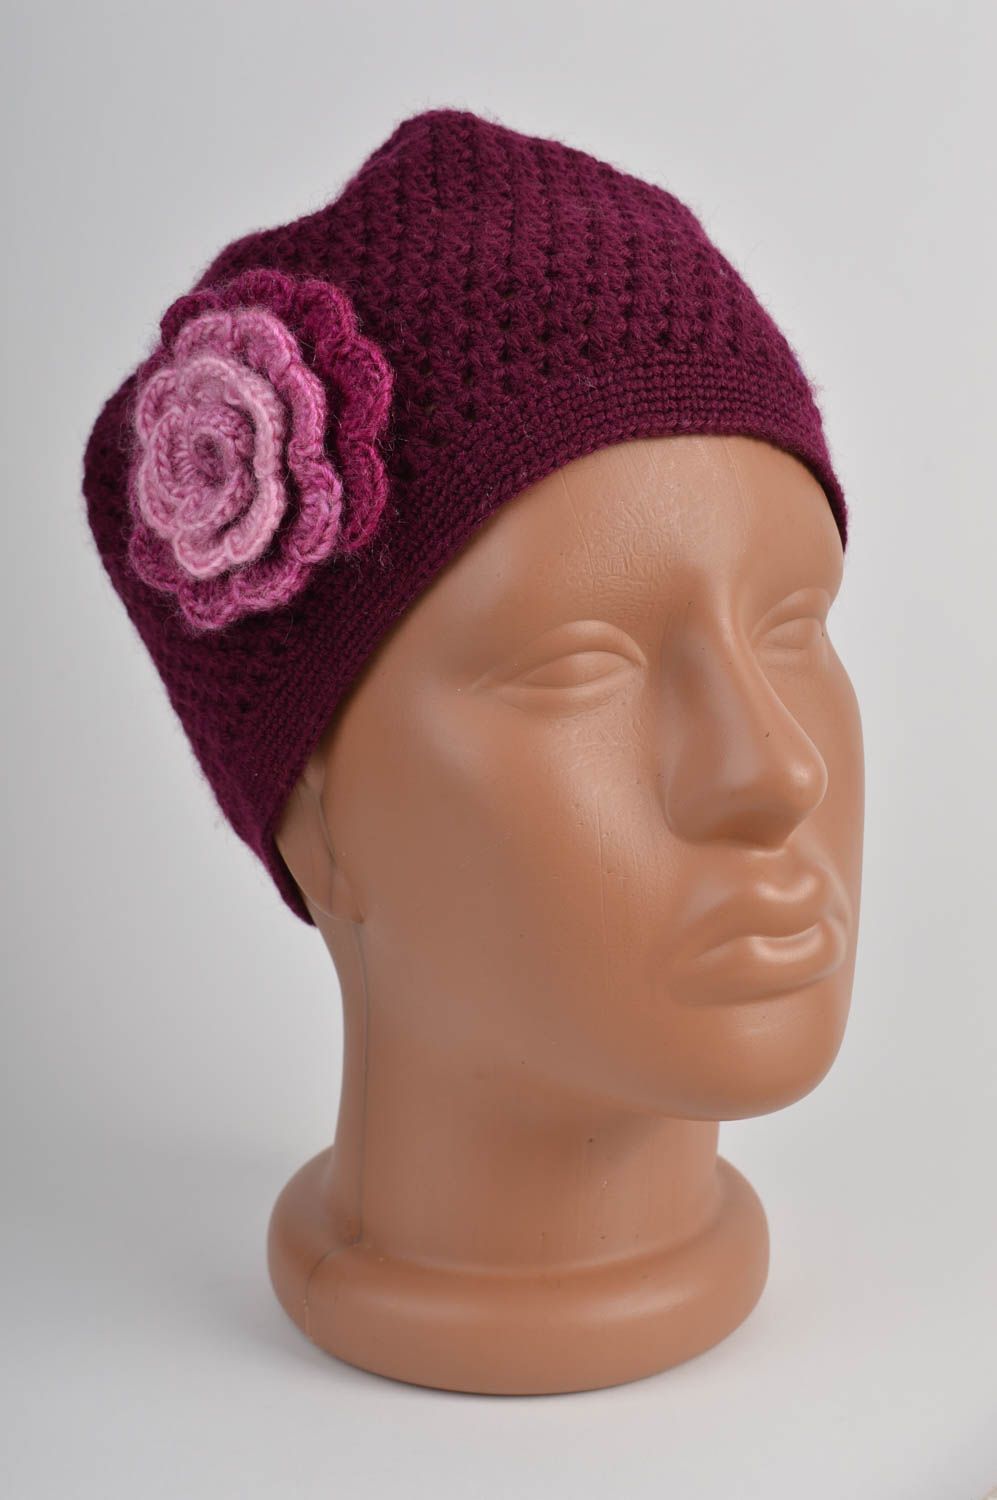 Beautiful homemade crochet baby hat handmade wool hat warm hat gifts for kids photo 2